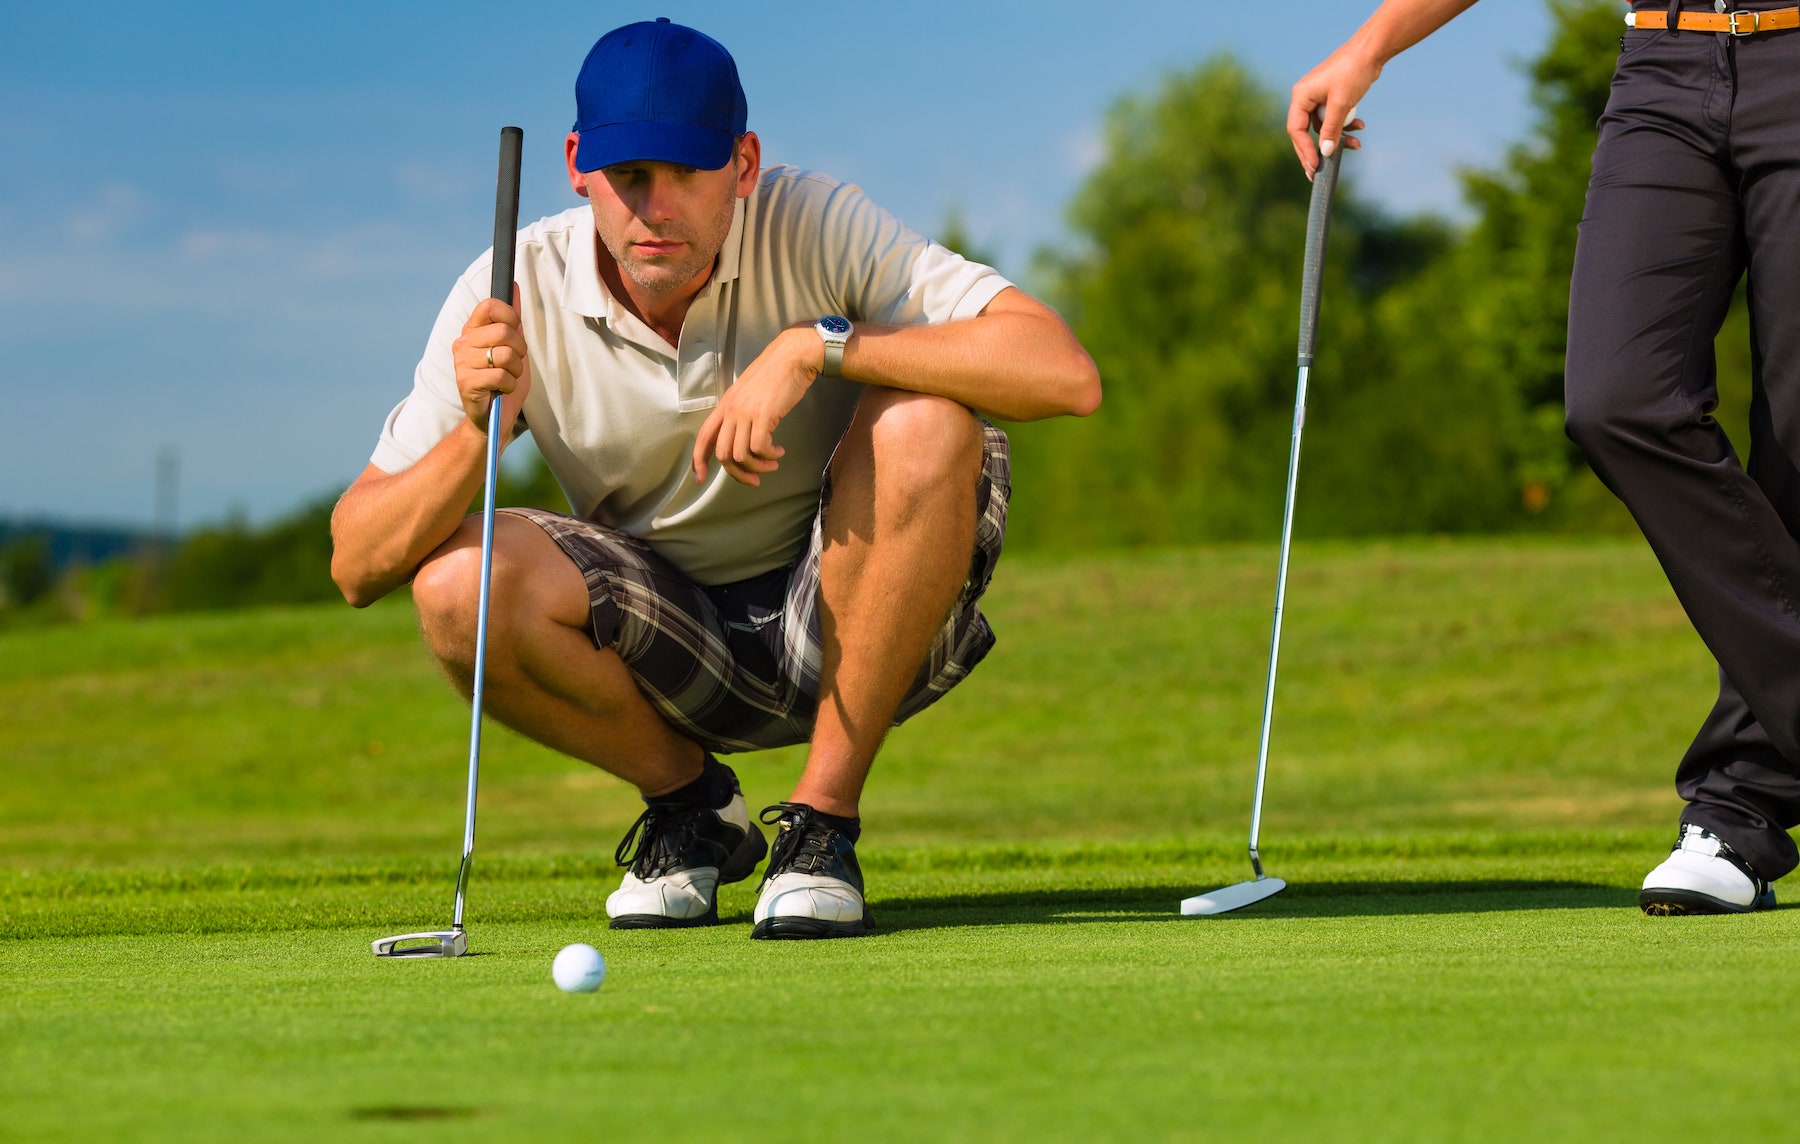 tournois de golf _ golf handicap software